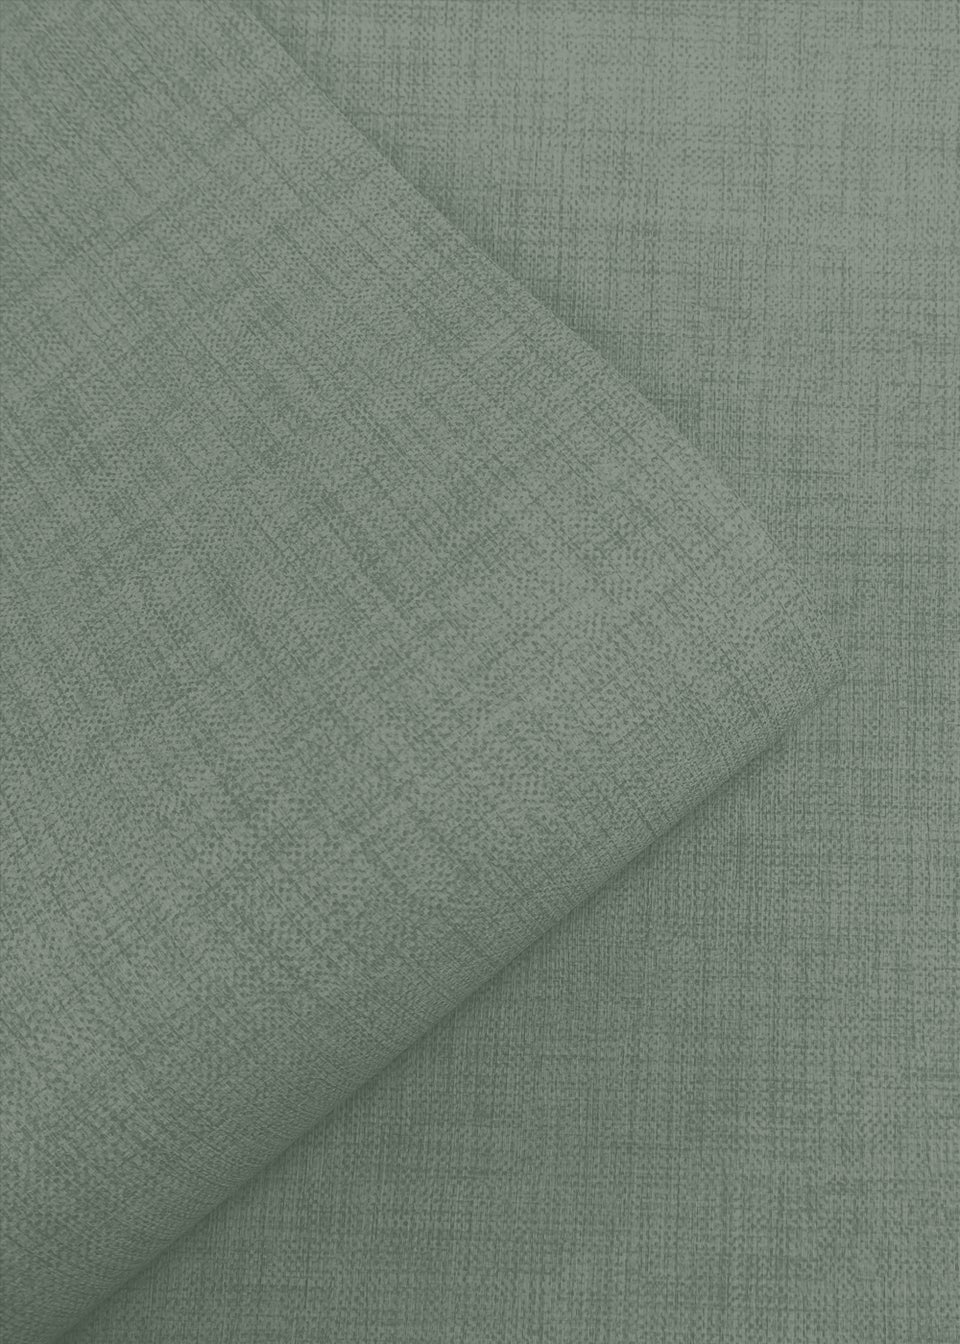 Muriva Cambric Texture Wallpaper